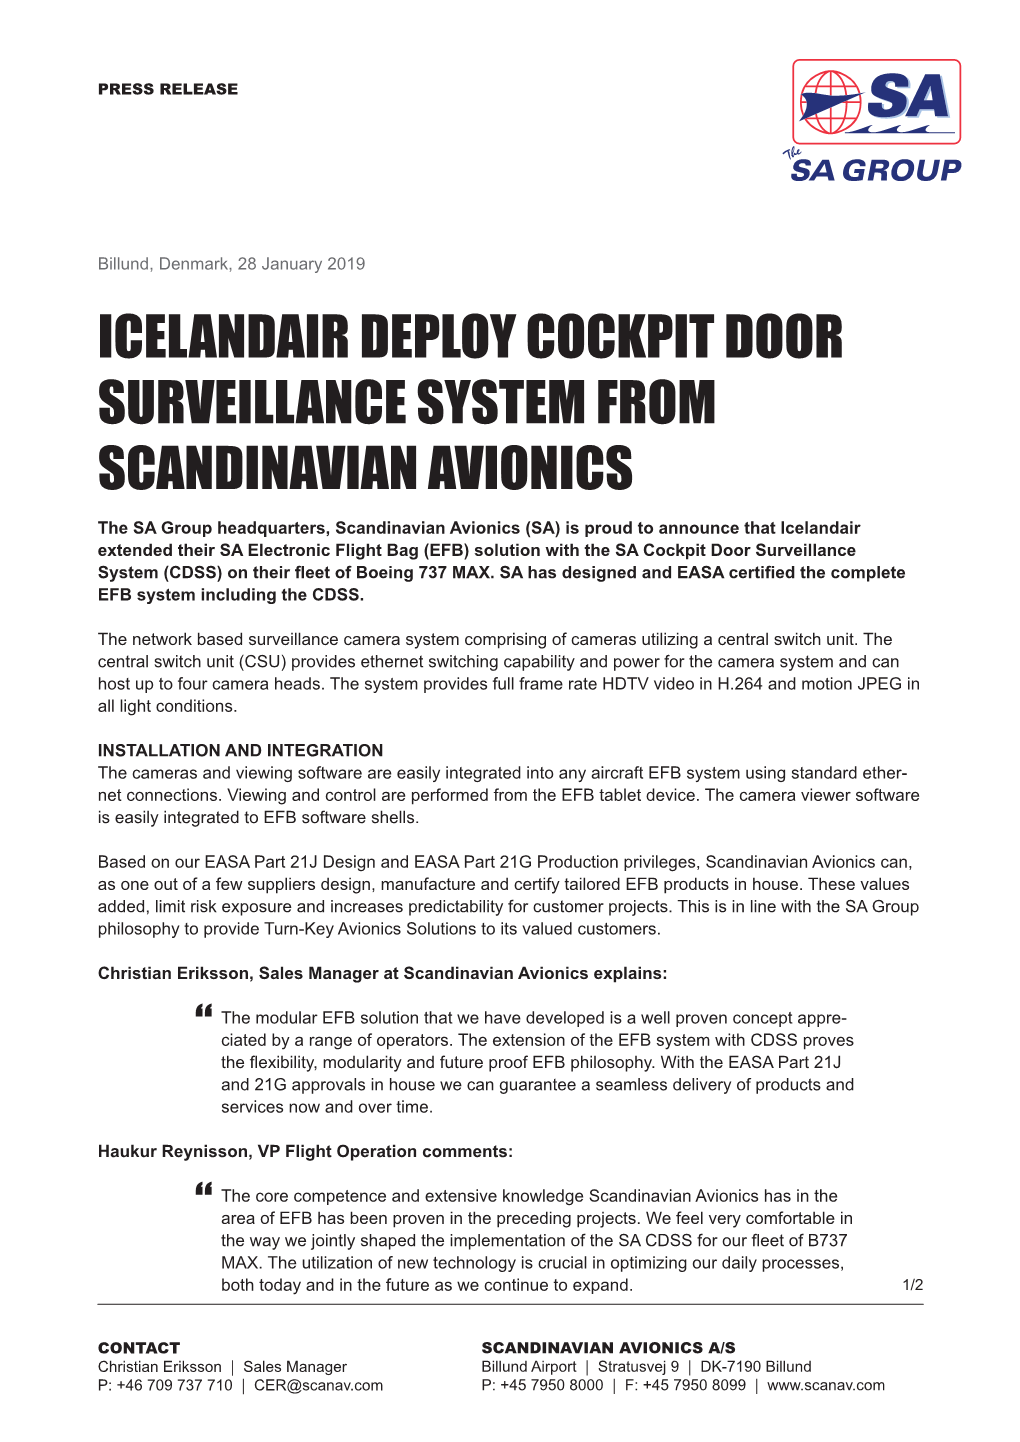 Icelandair Deploy Cockpit Door Surveillance System for Their Fleet Of